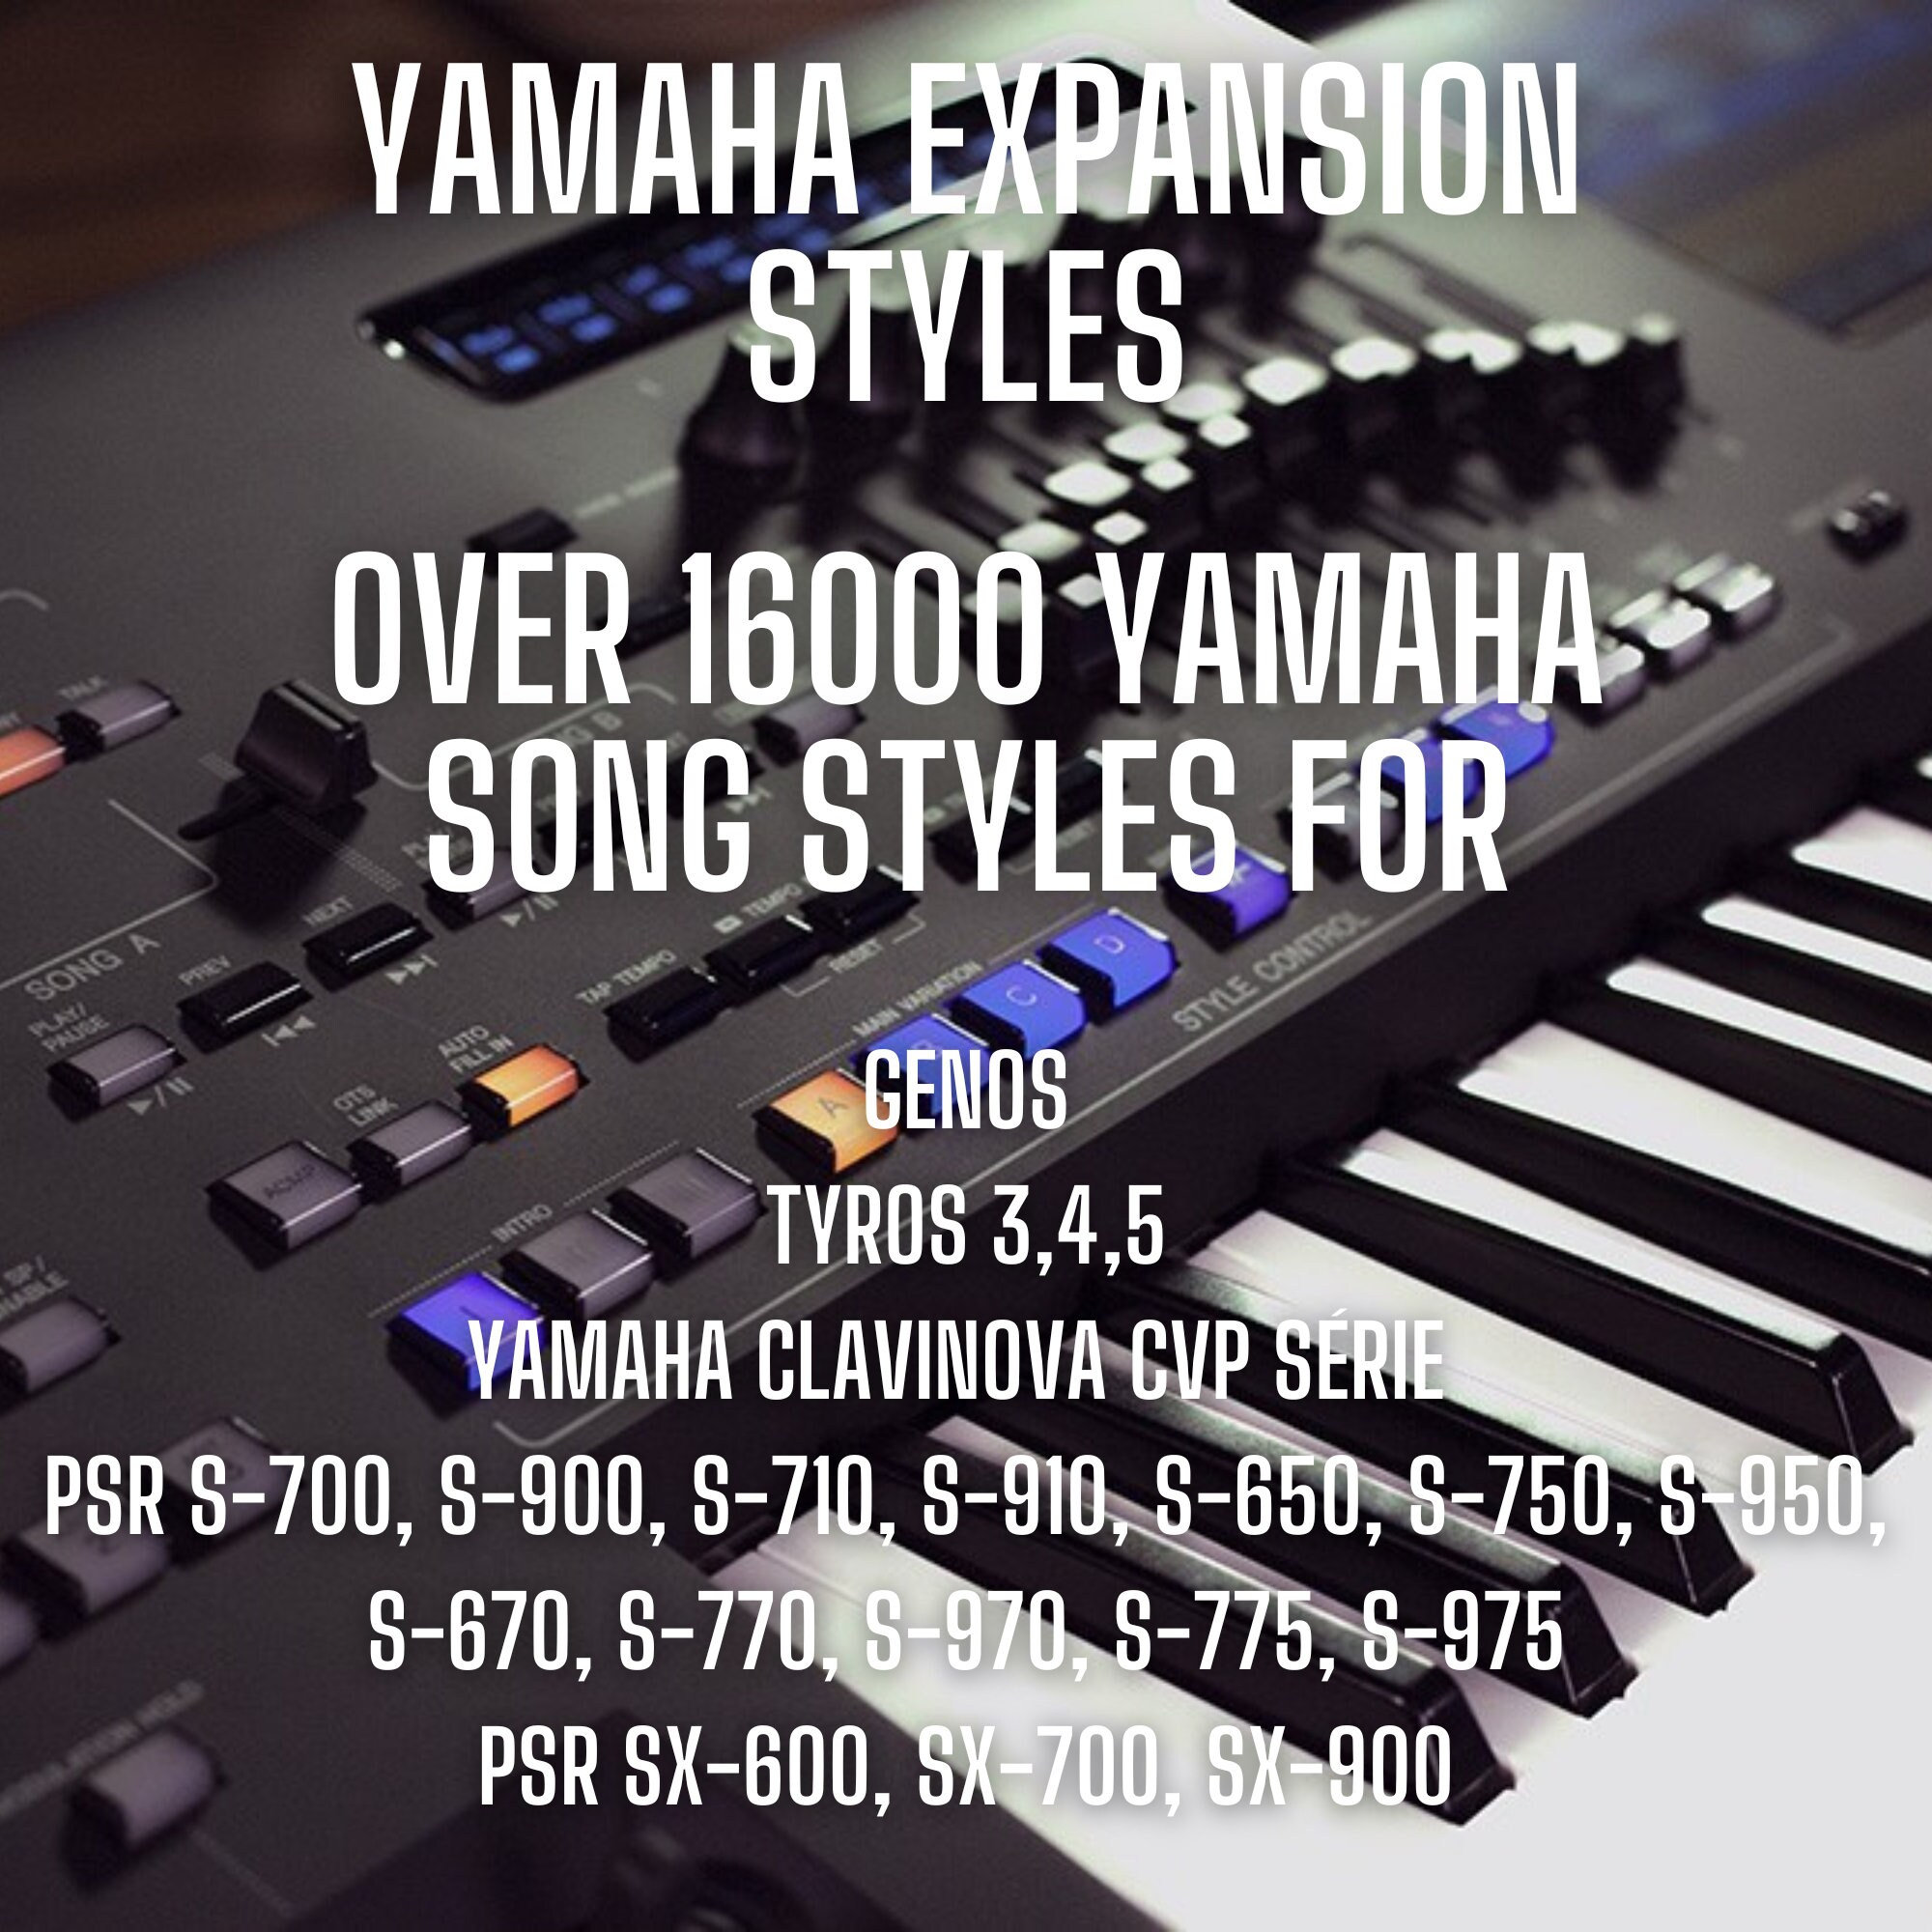 CLAVIER ARRANGEUR Yamaha PSR-S770 61 notes